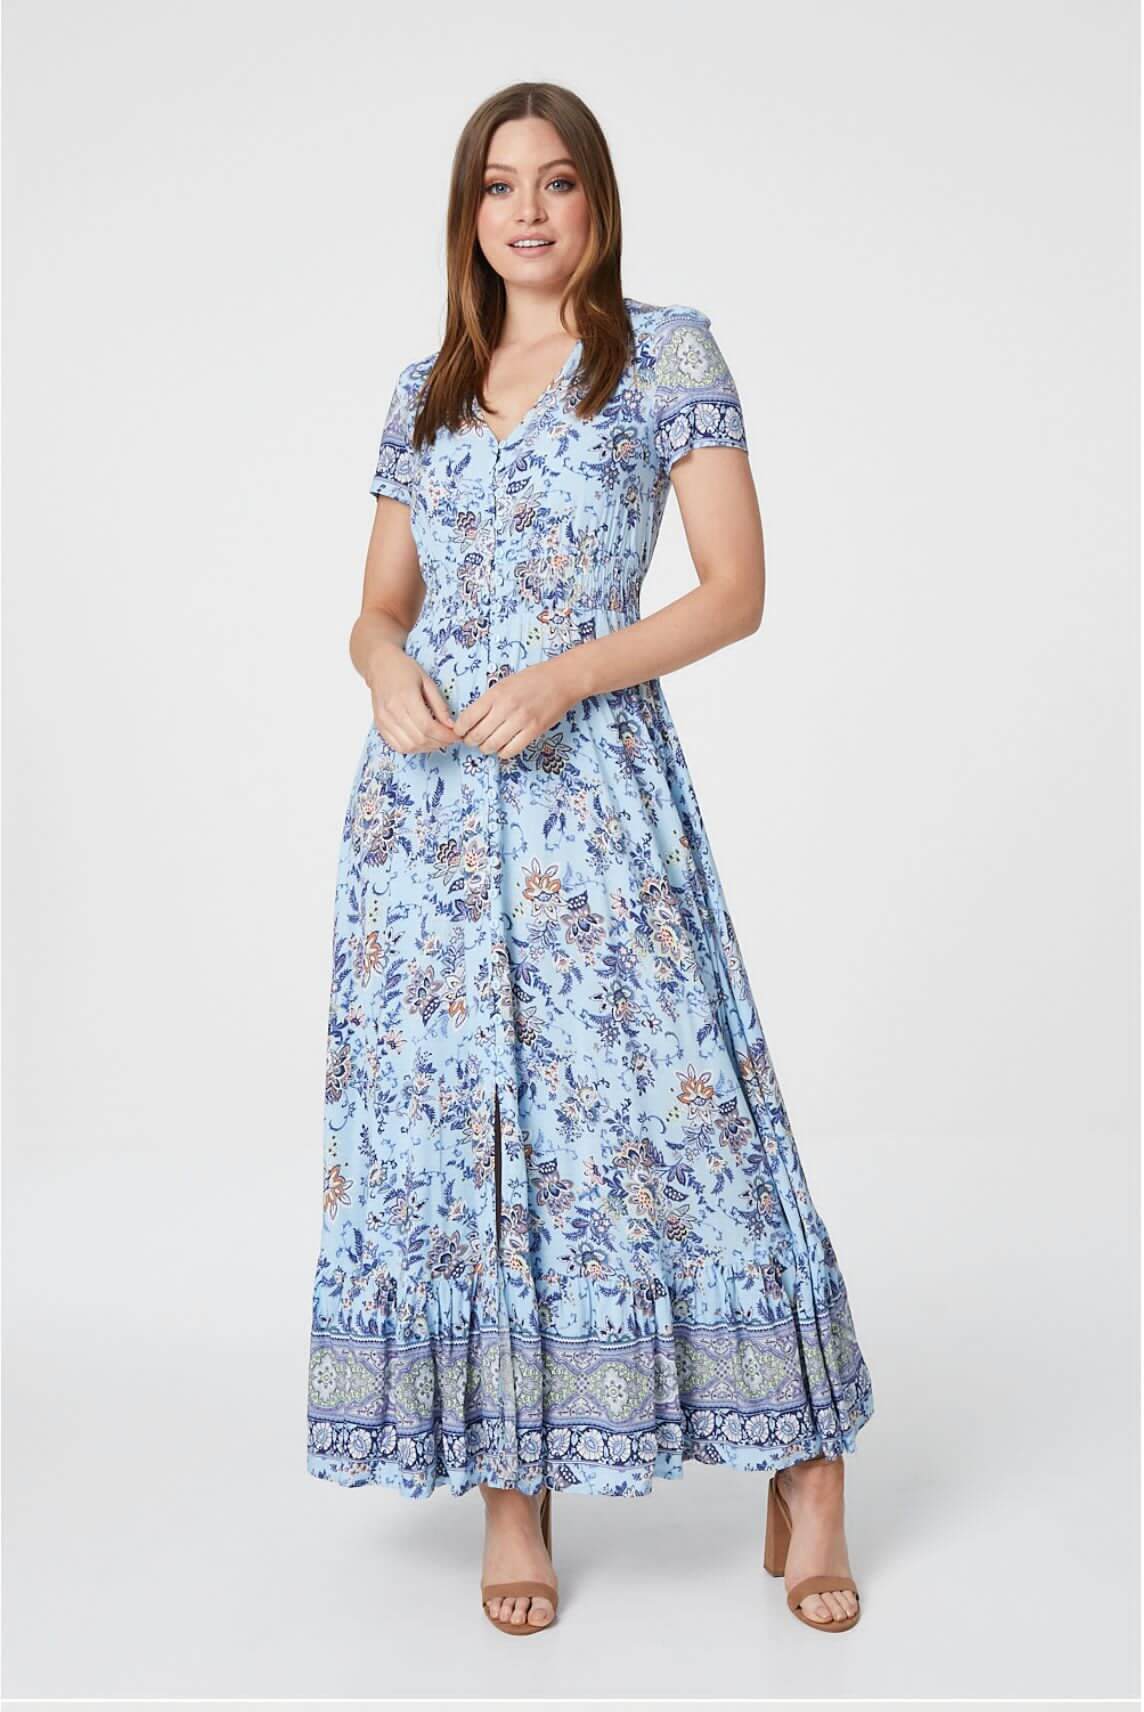 Martella Blue Floral Short Sleeve Maxi Dress